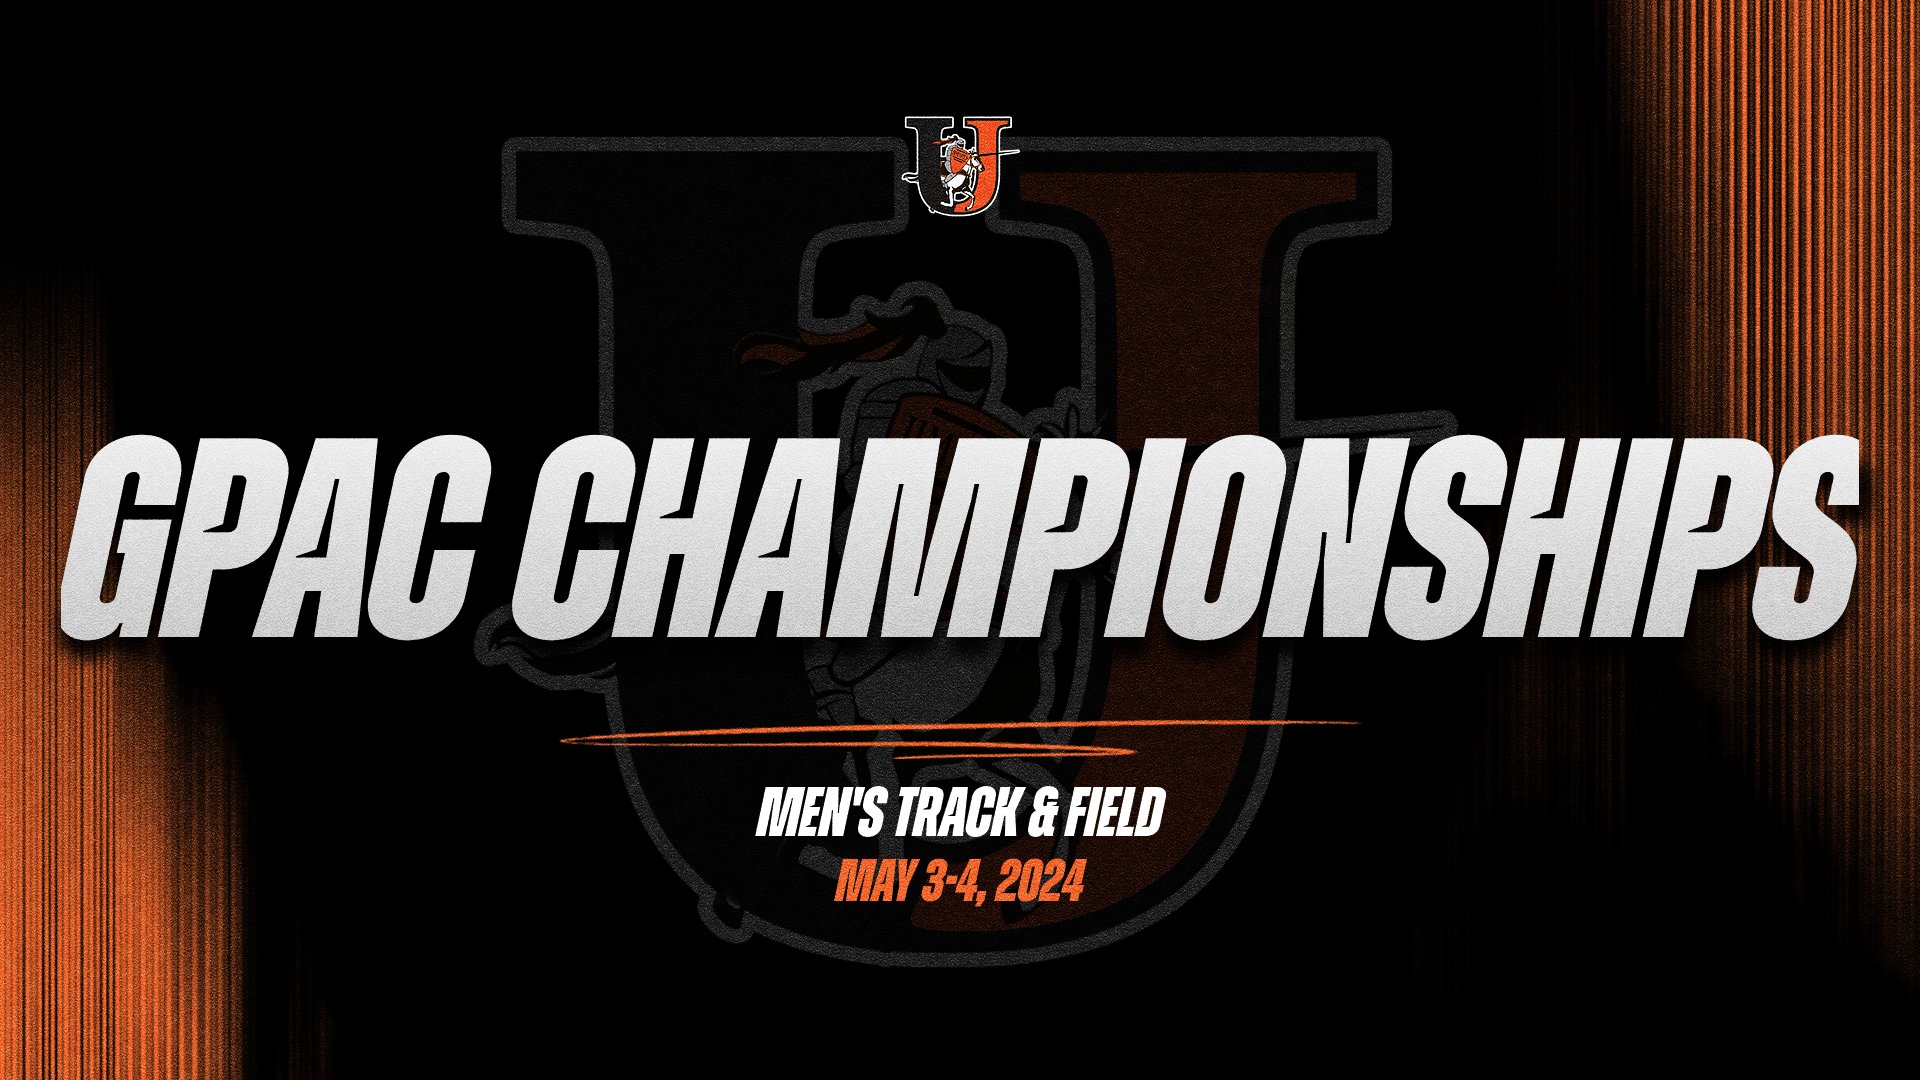 Men's track & field - GPAC Championships